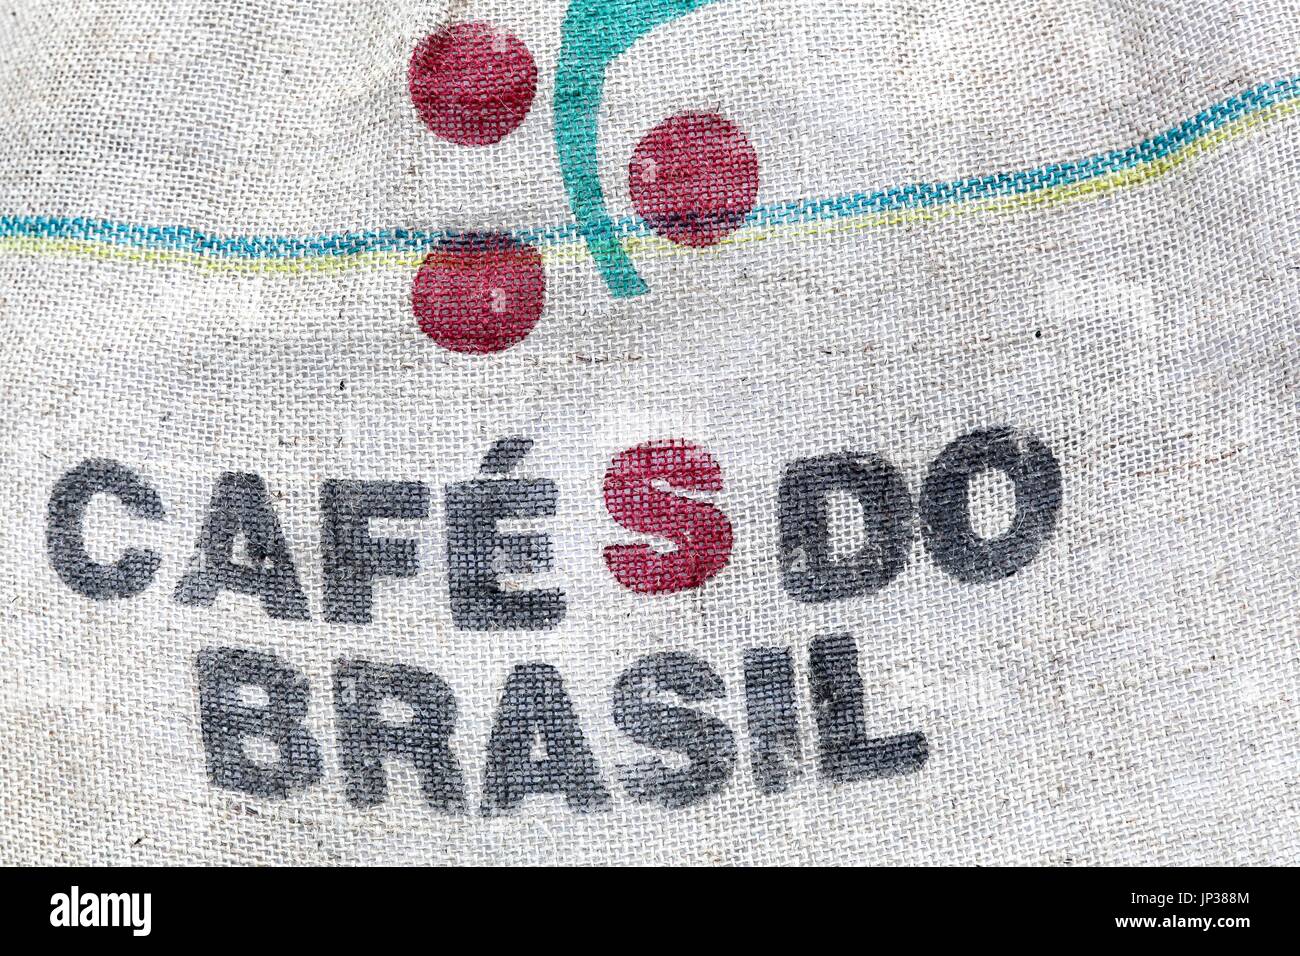 Café do brasil hi-res stock photography and images - Alamy